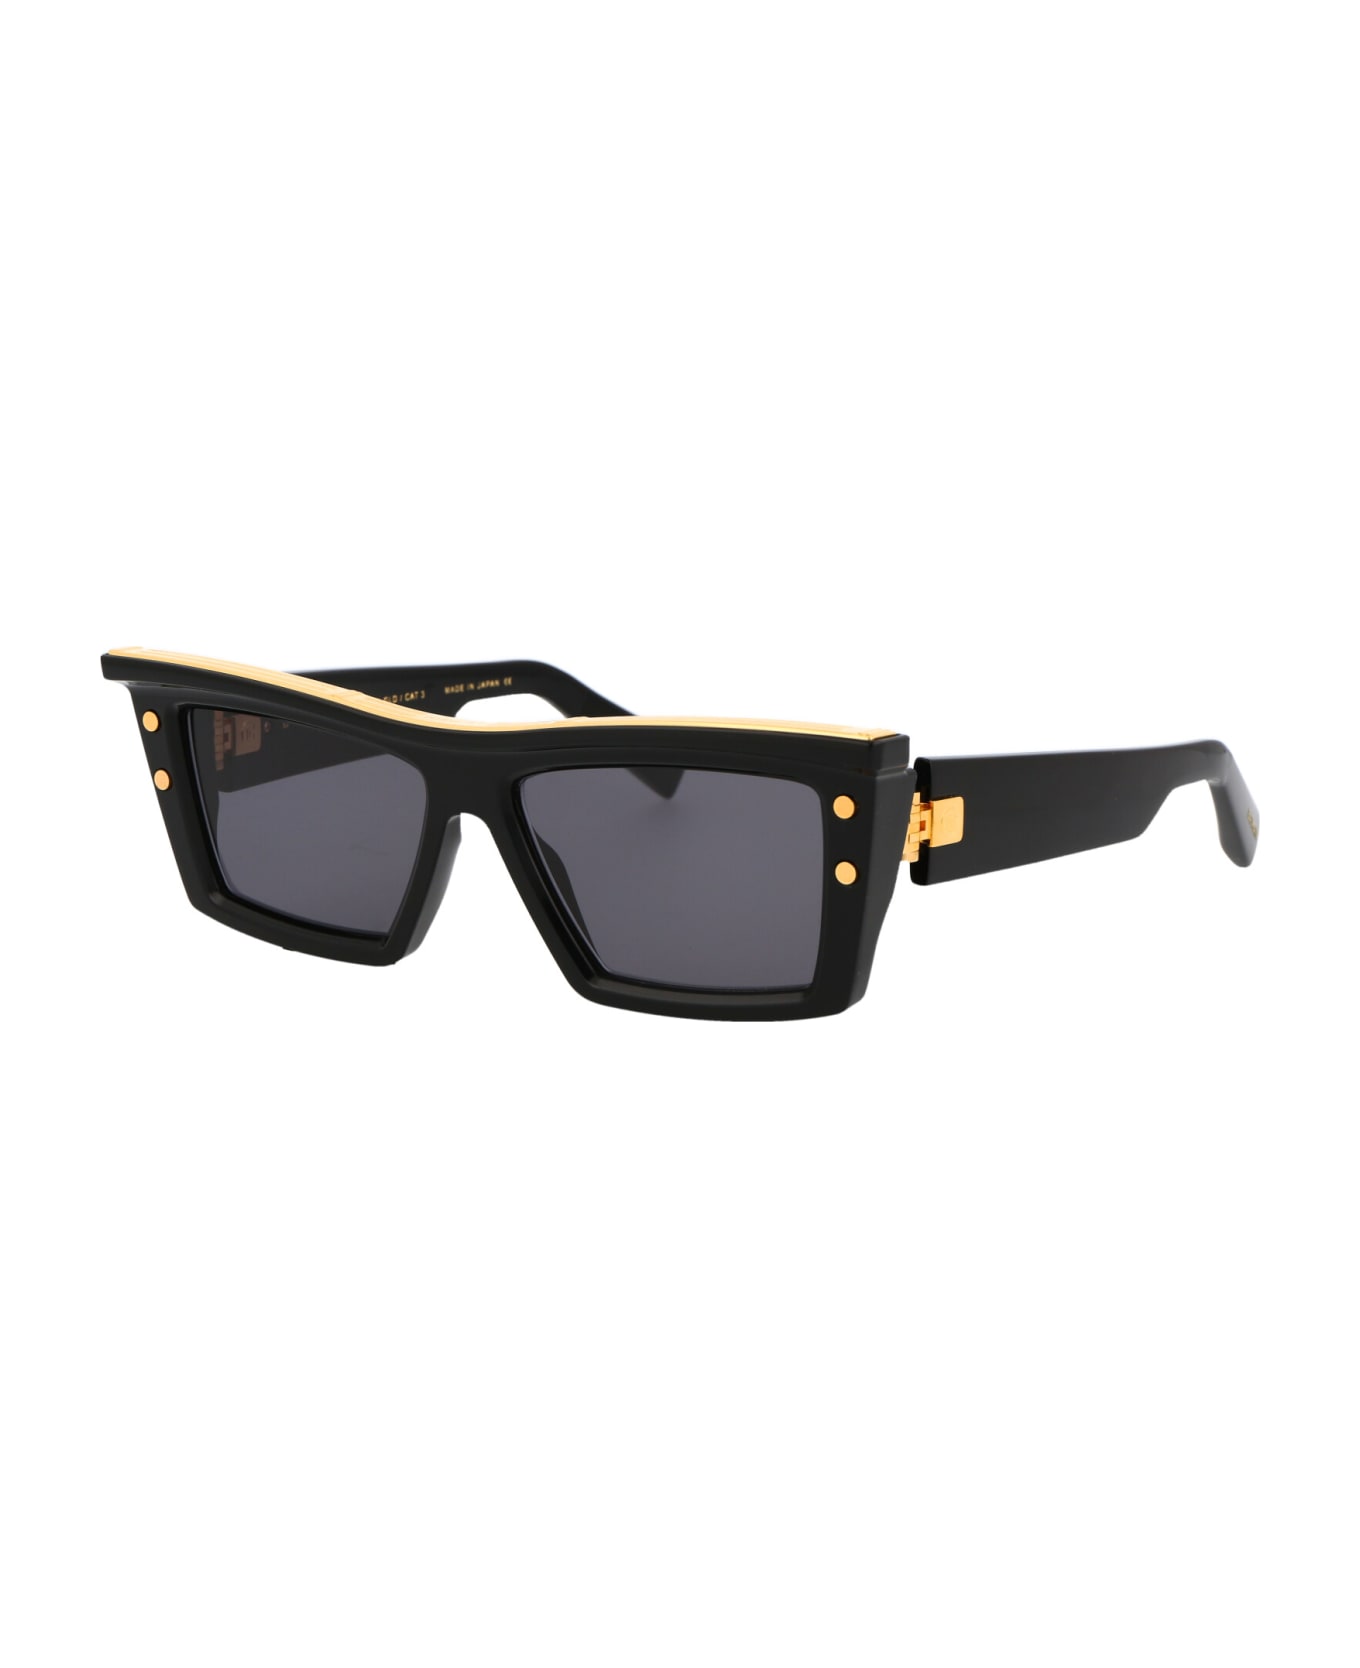 Balmain B-vii Sunglasses - BLACK GOLD